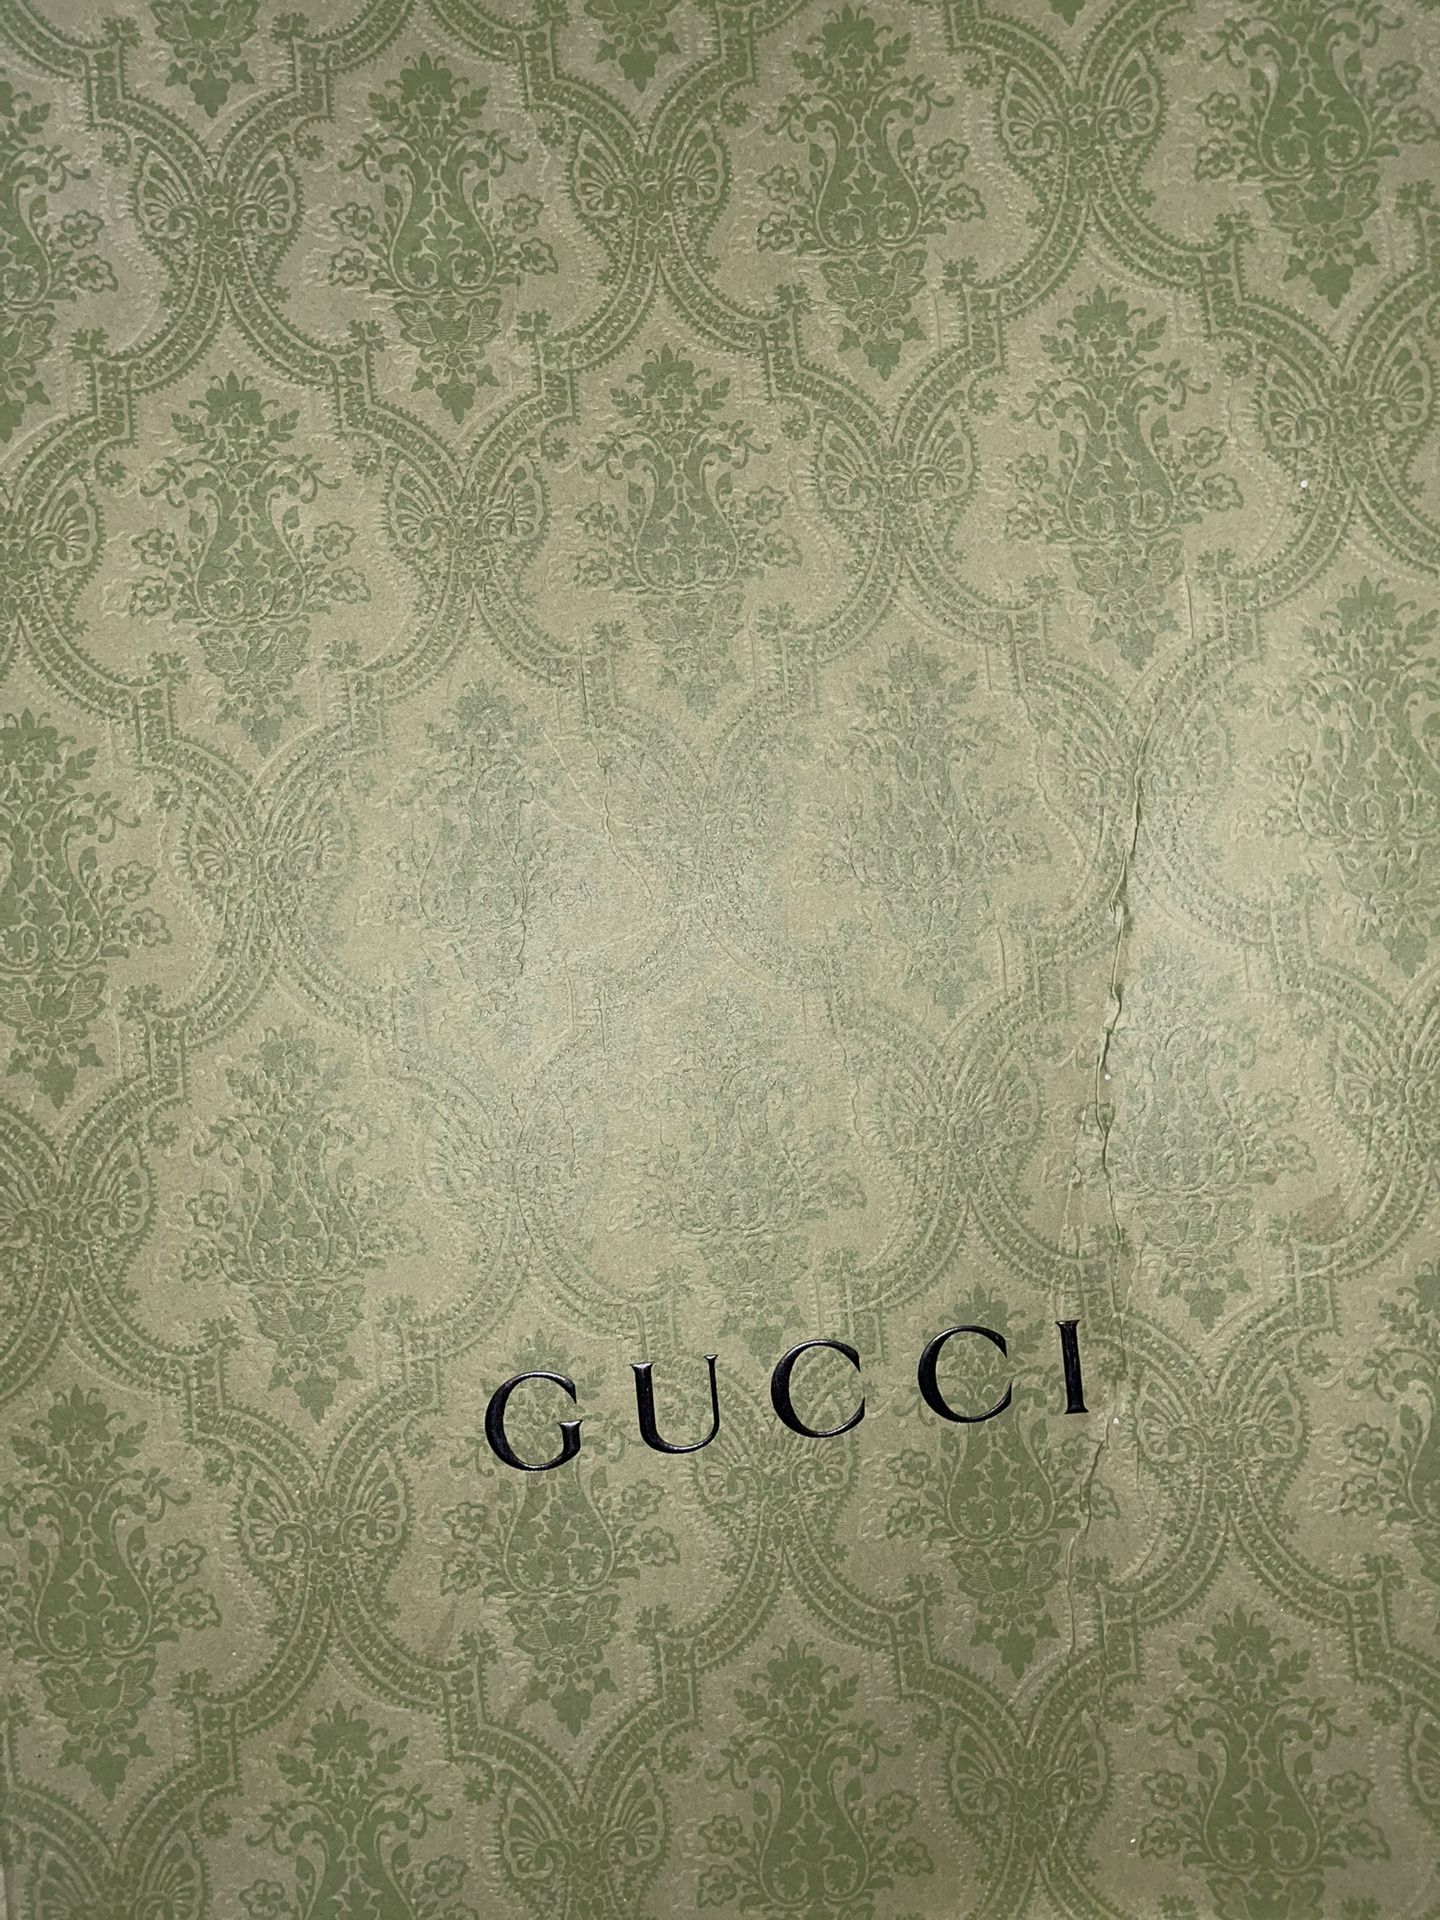 New Authentic Gucci Medium Ophidia GG Supreme Canvas/Leather Belt Bag Size  85cm